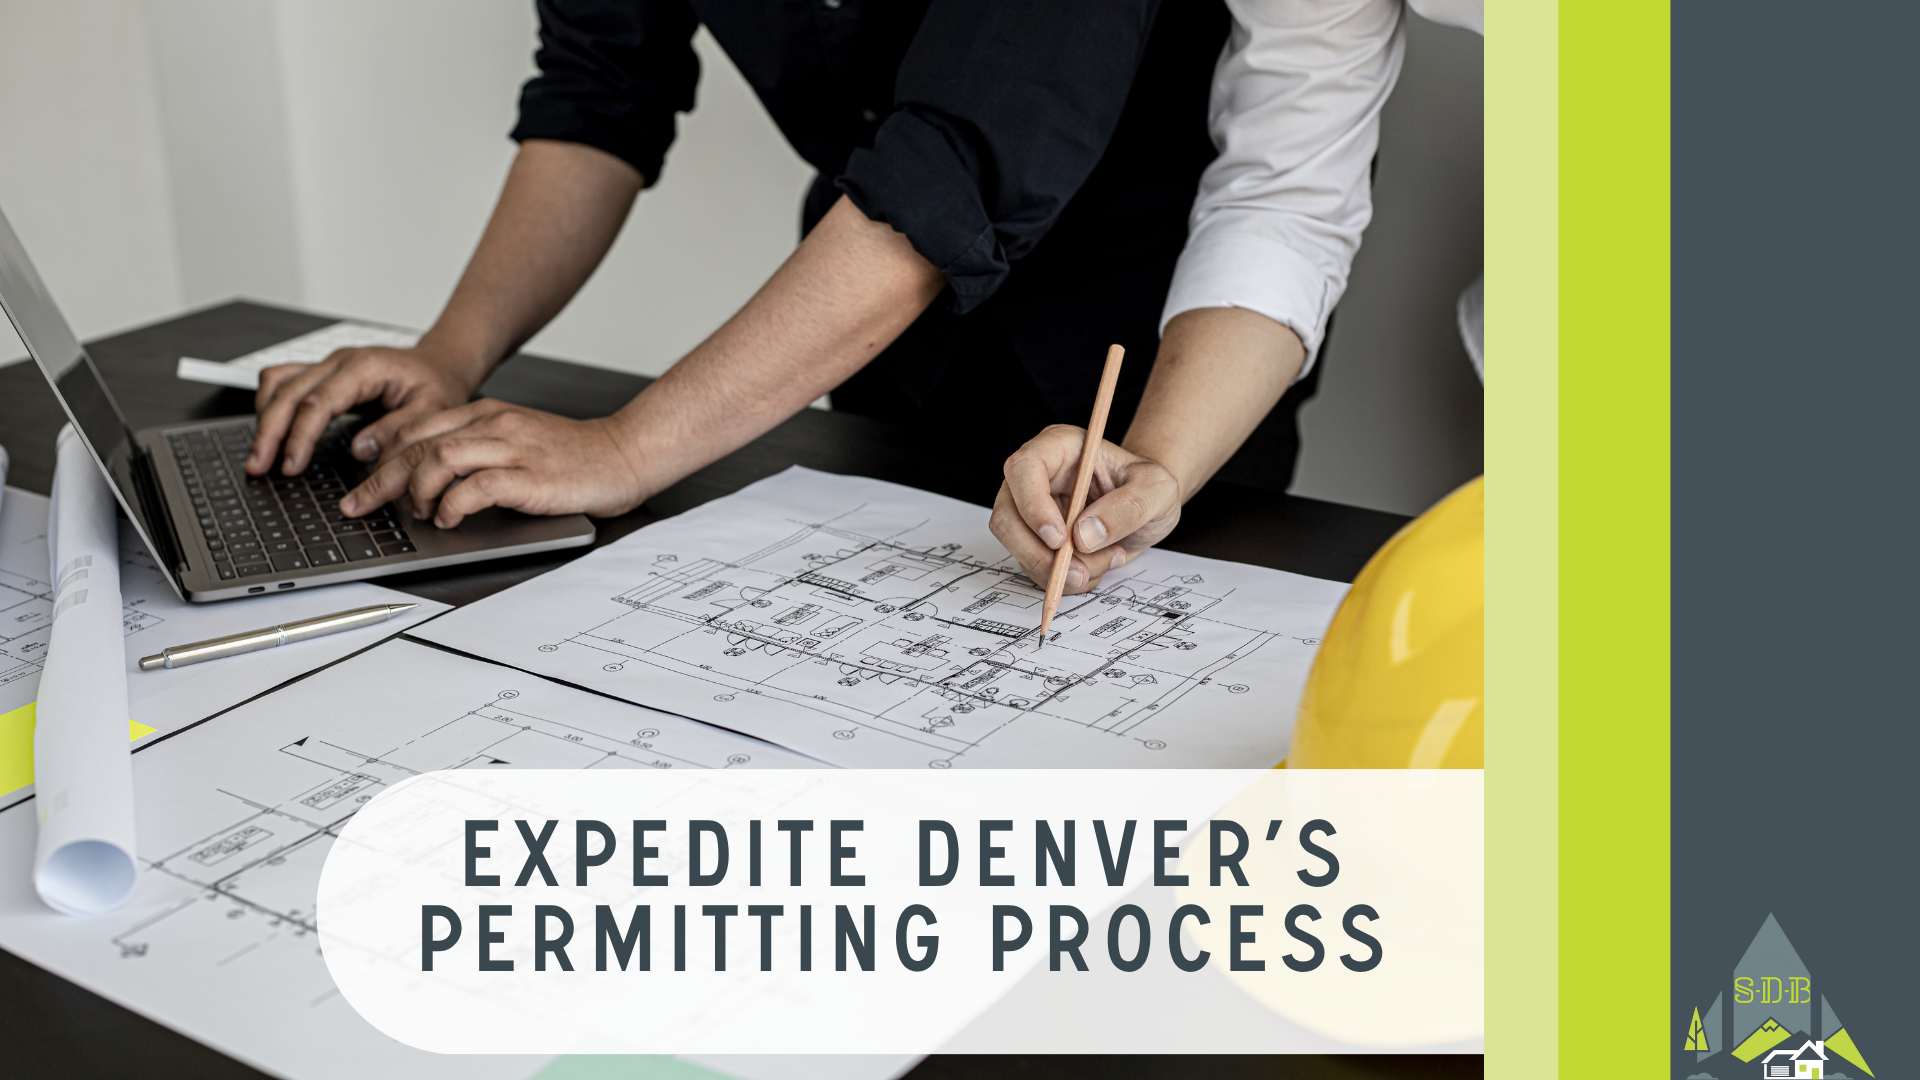 Sustainable Design Build - Expedite Denver's Permitting Process